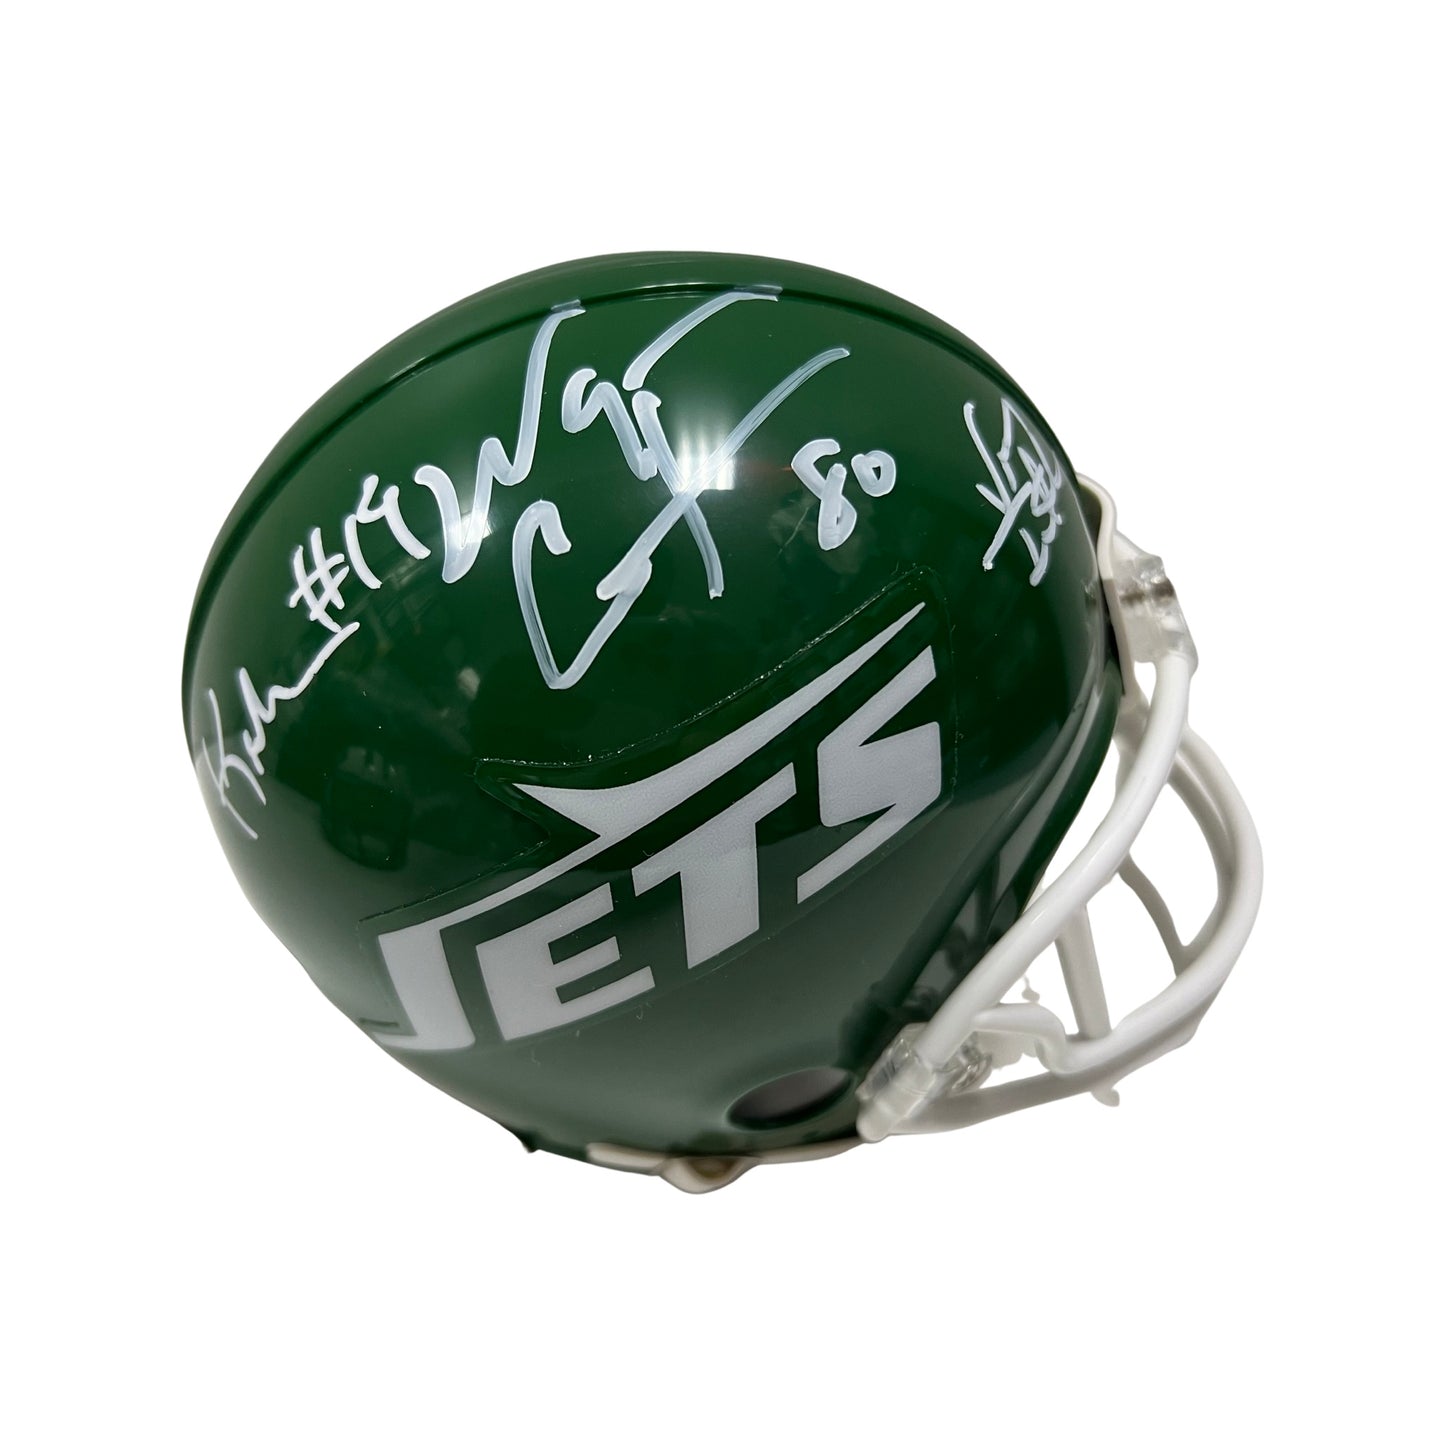 Wayne Chrebet, Keyshawn Johnson & Vinny Testaverde Autographed New York Jets Old School Green Mini Helmet JSA